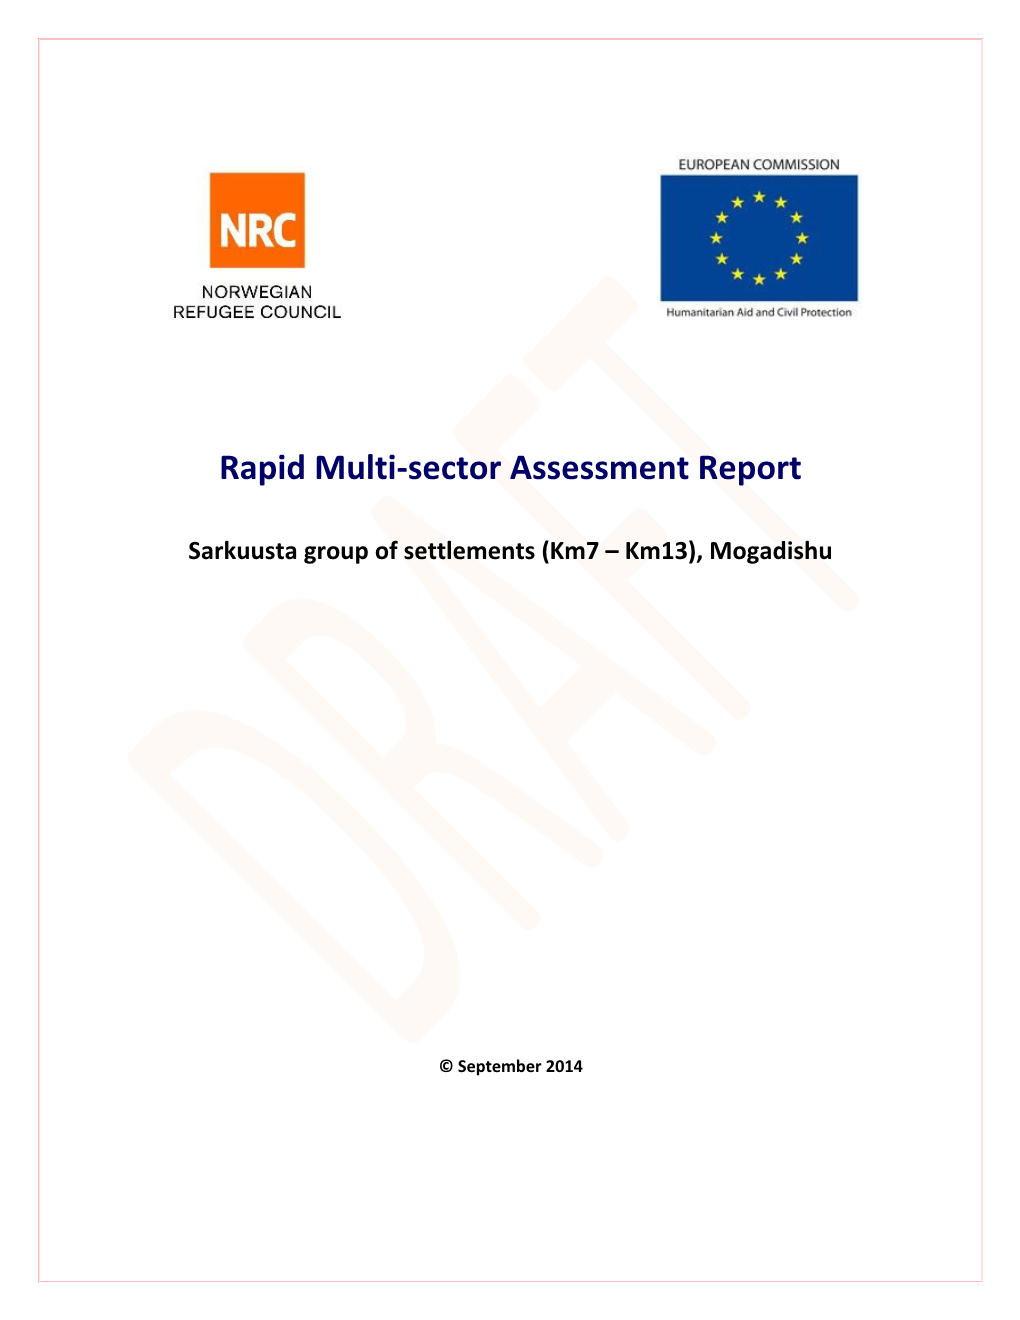 Rapid Multi-Sector Assessment Report